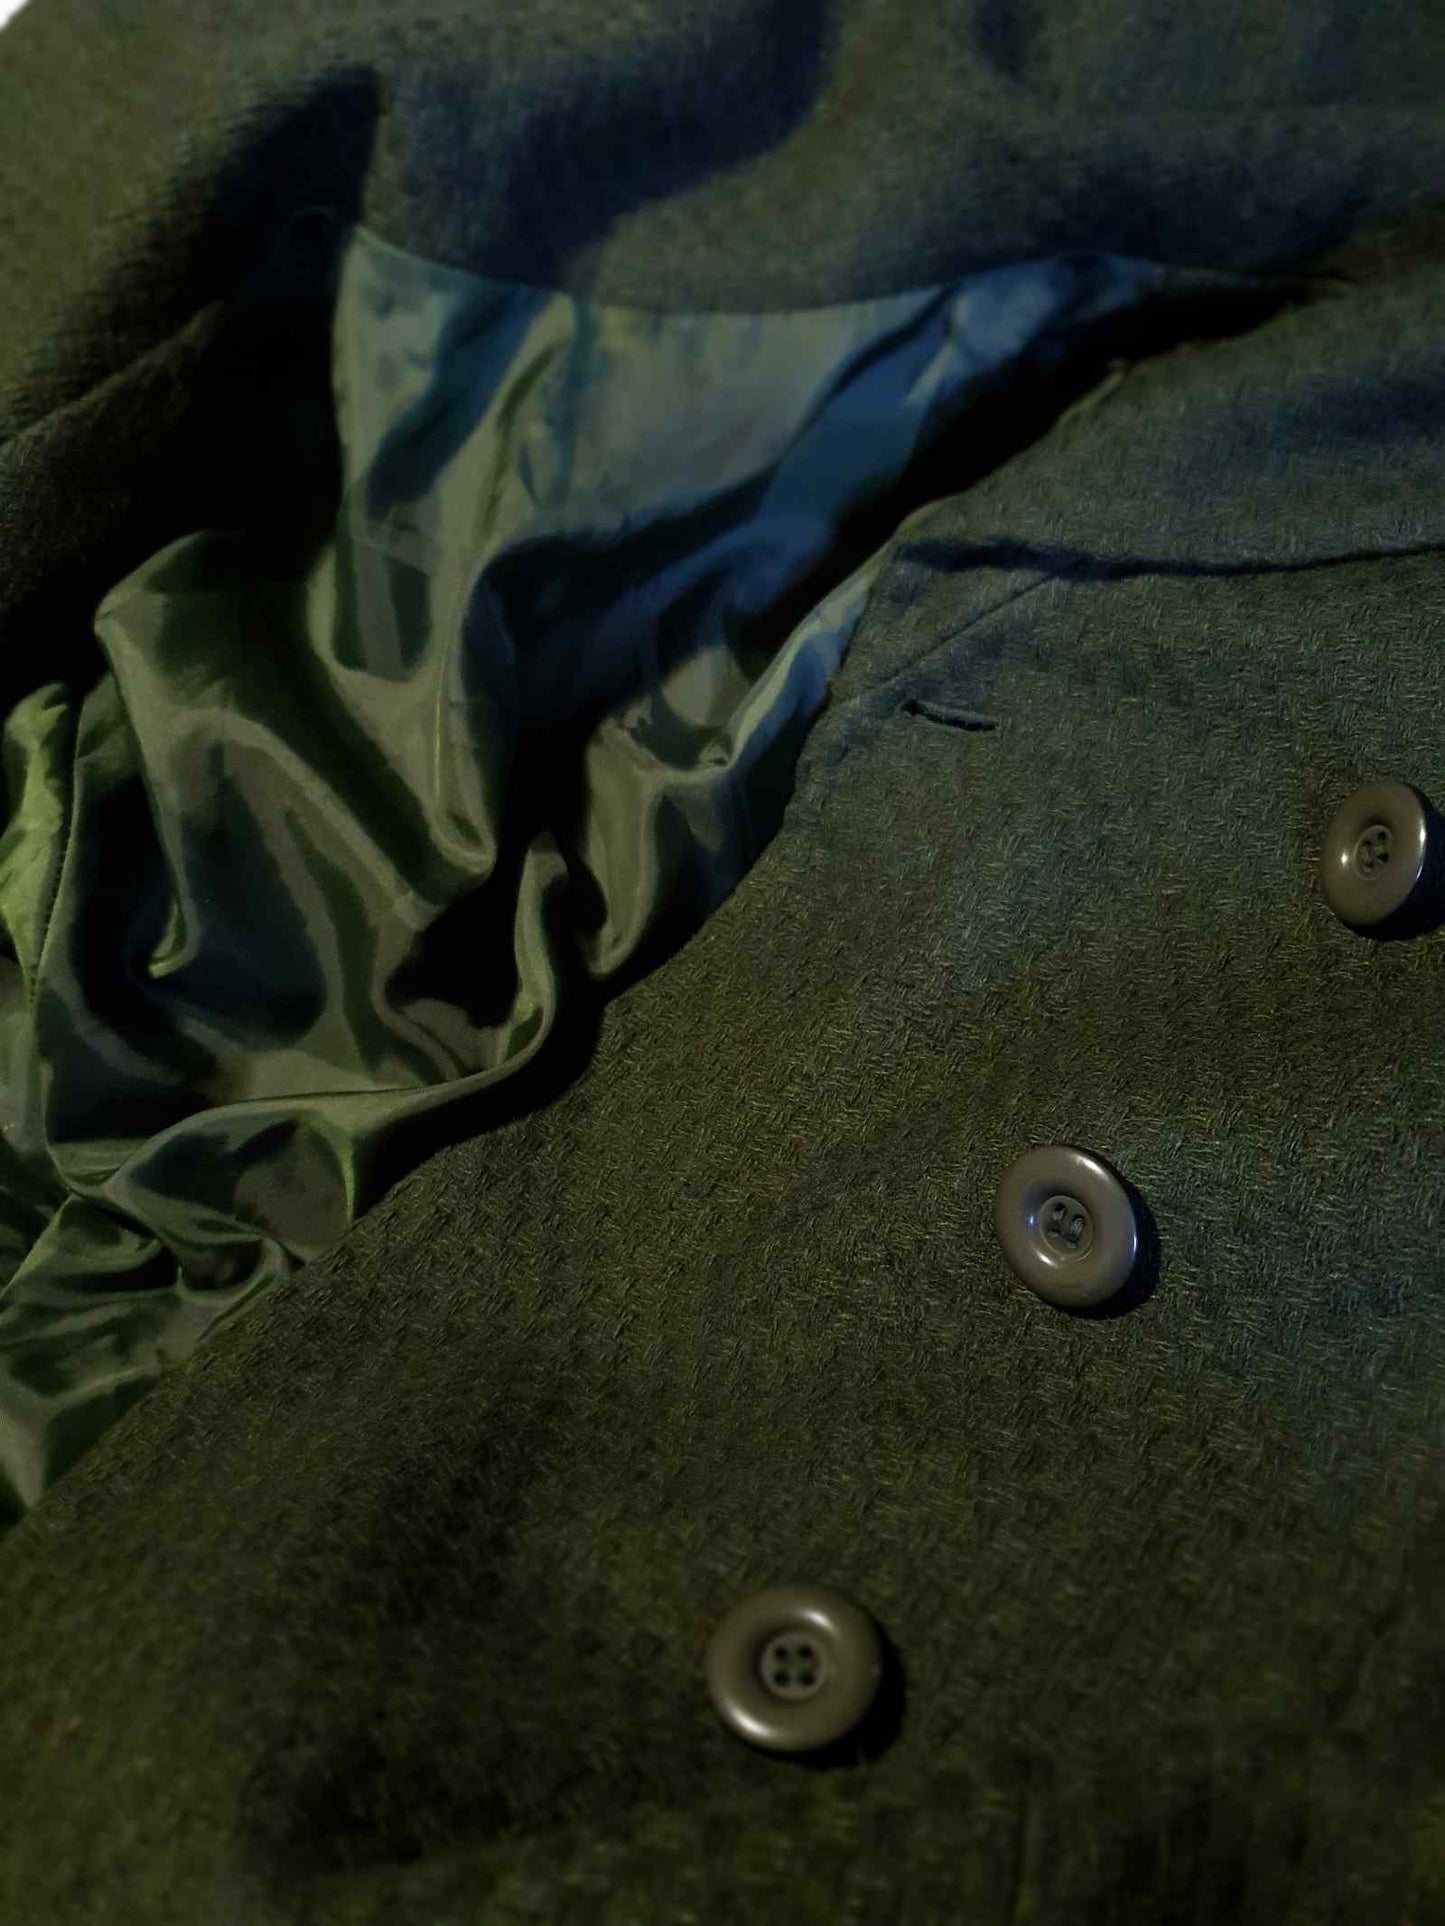 Vintage 90s Green Wool Jacket - Women's Size 12/14 50s style